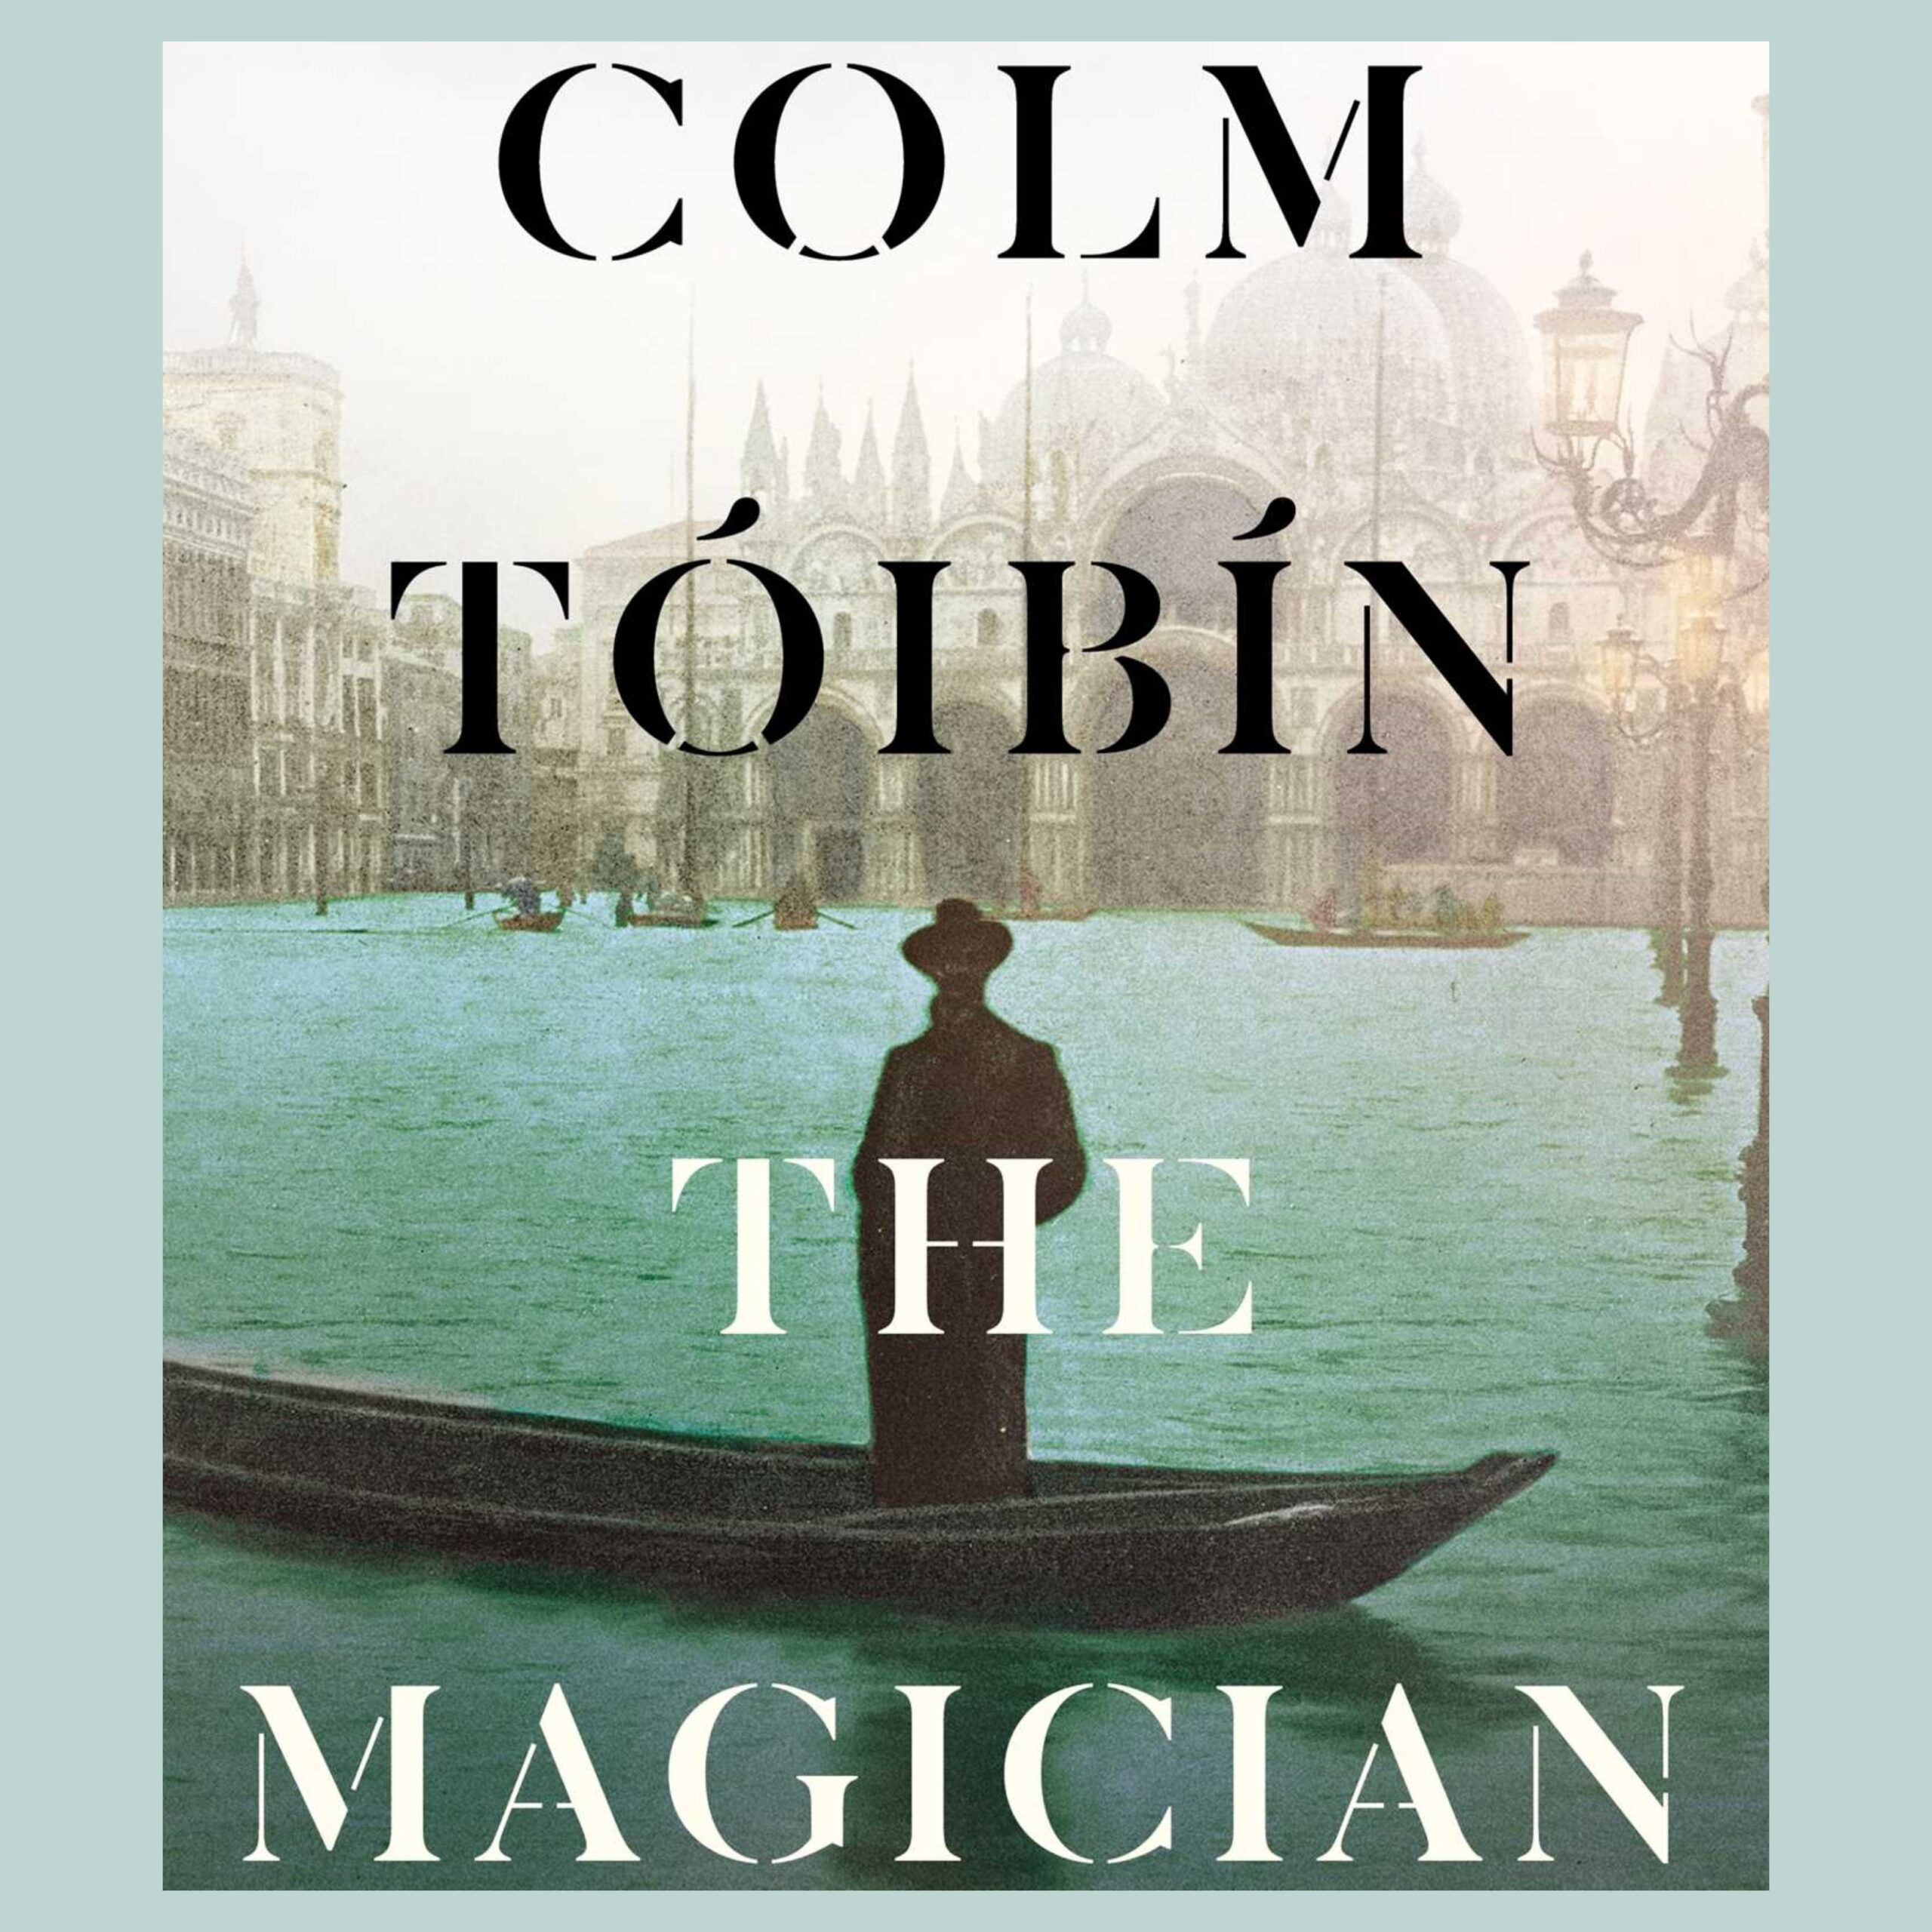 #1758 Colm Tóibín "The Magician" | The Book Show